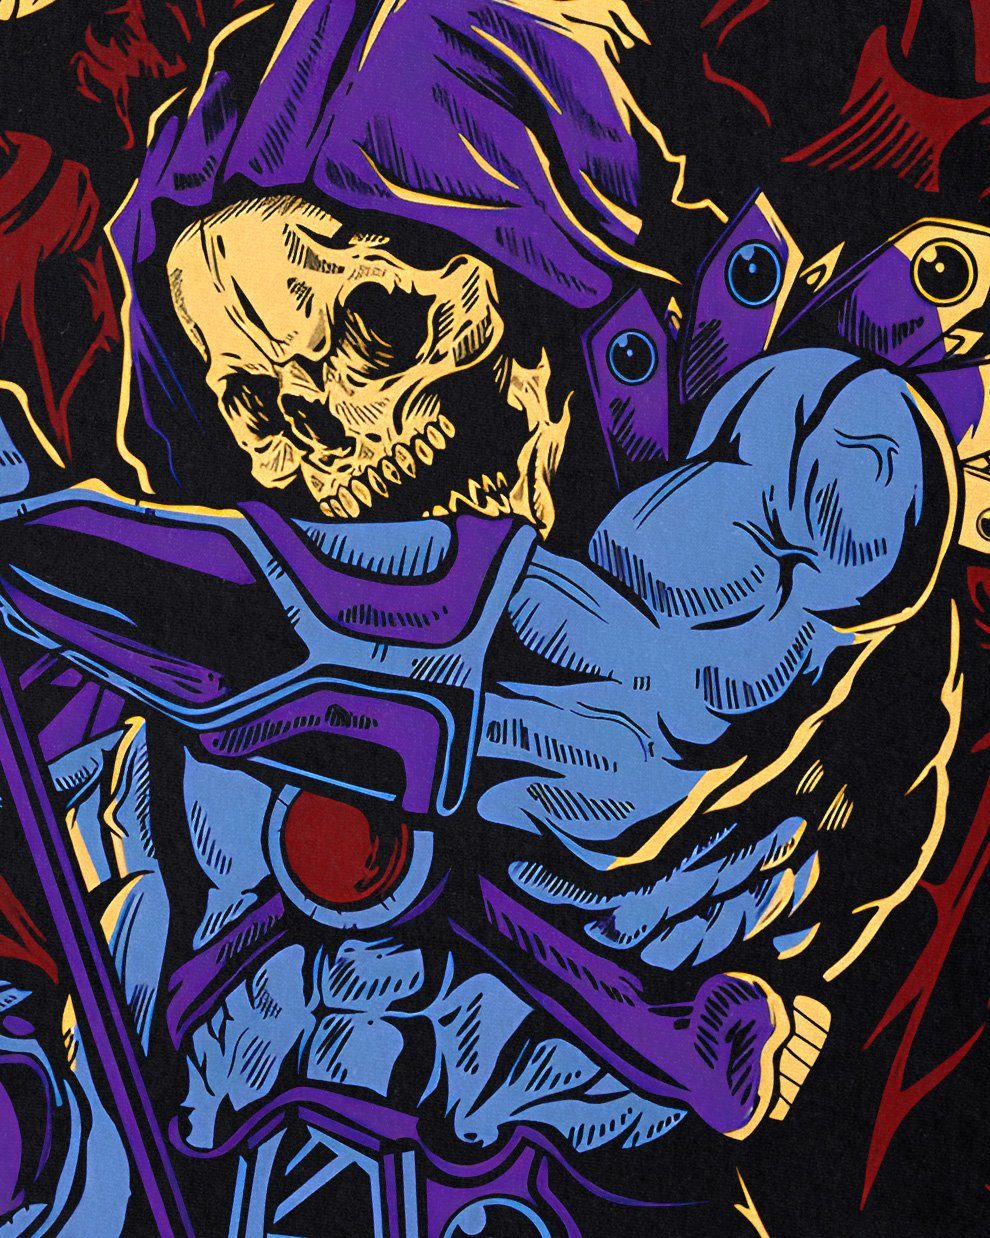 Skeleton universe Rock he-man the T-Shirt style3 of masters skeletor Herren Print-Shirt